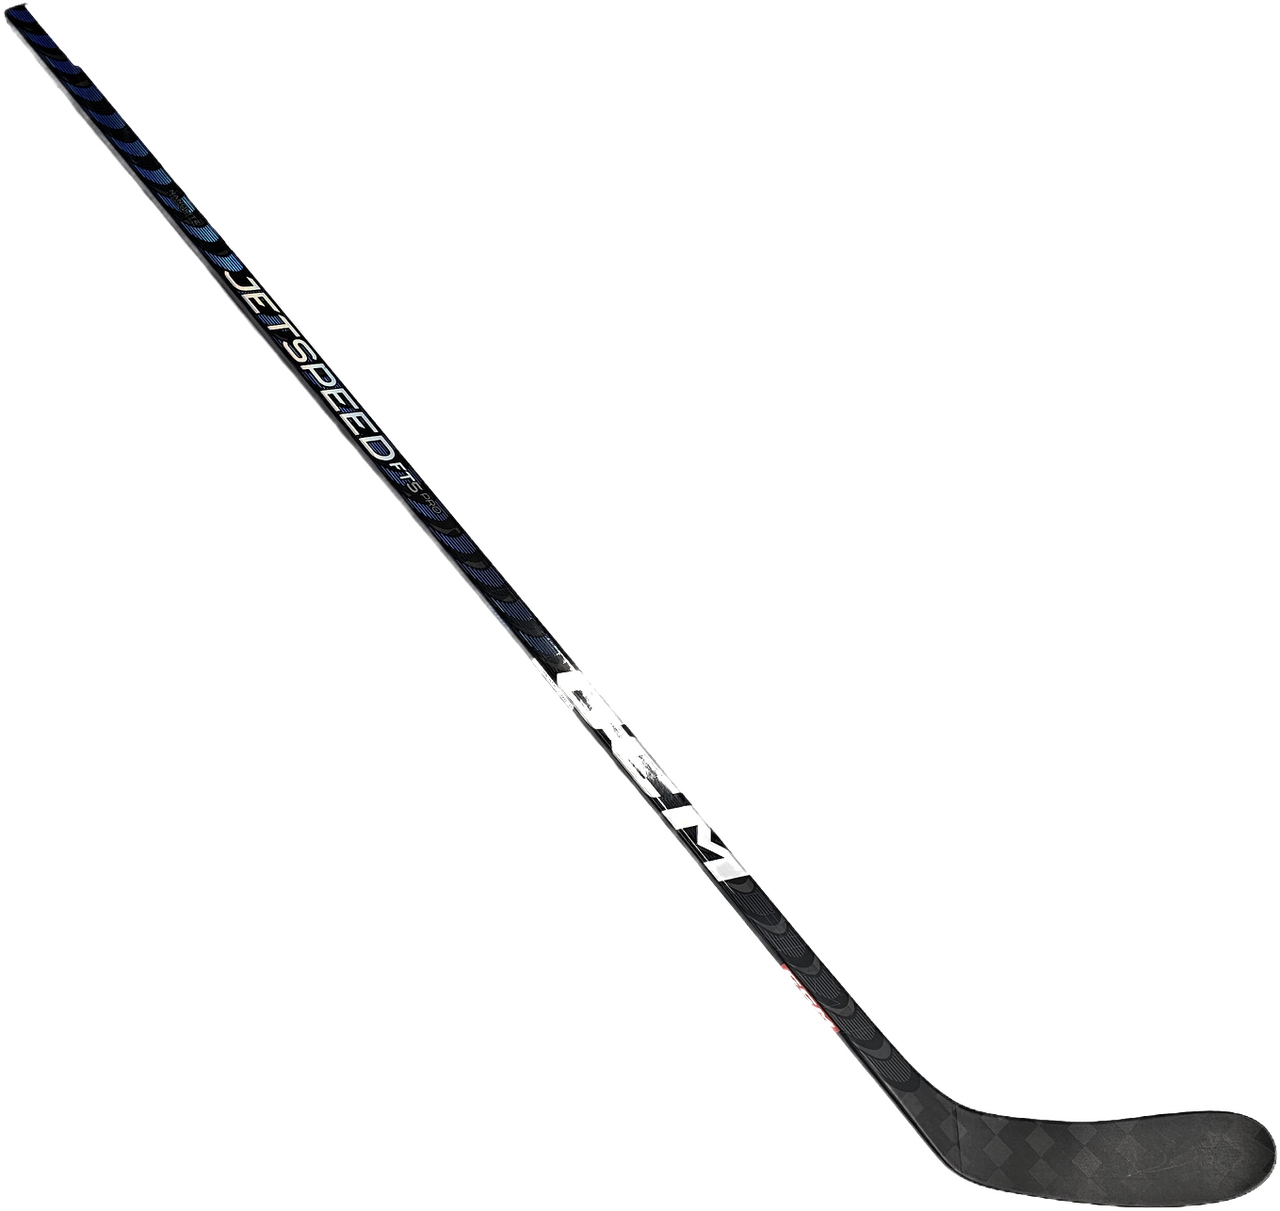 CCM Hockey Stick Jetspeed FT6 Pro Int Red - Hockey Store